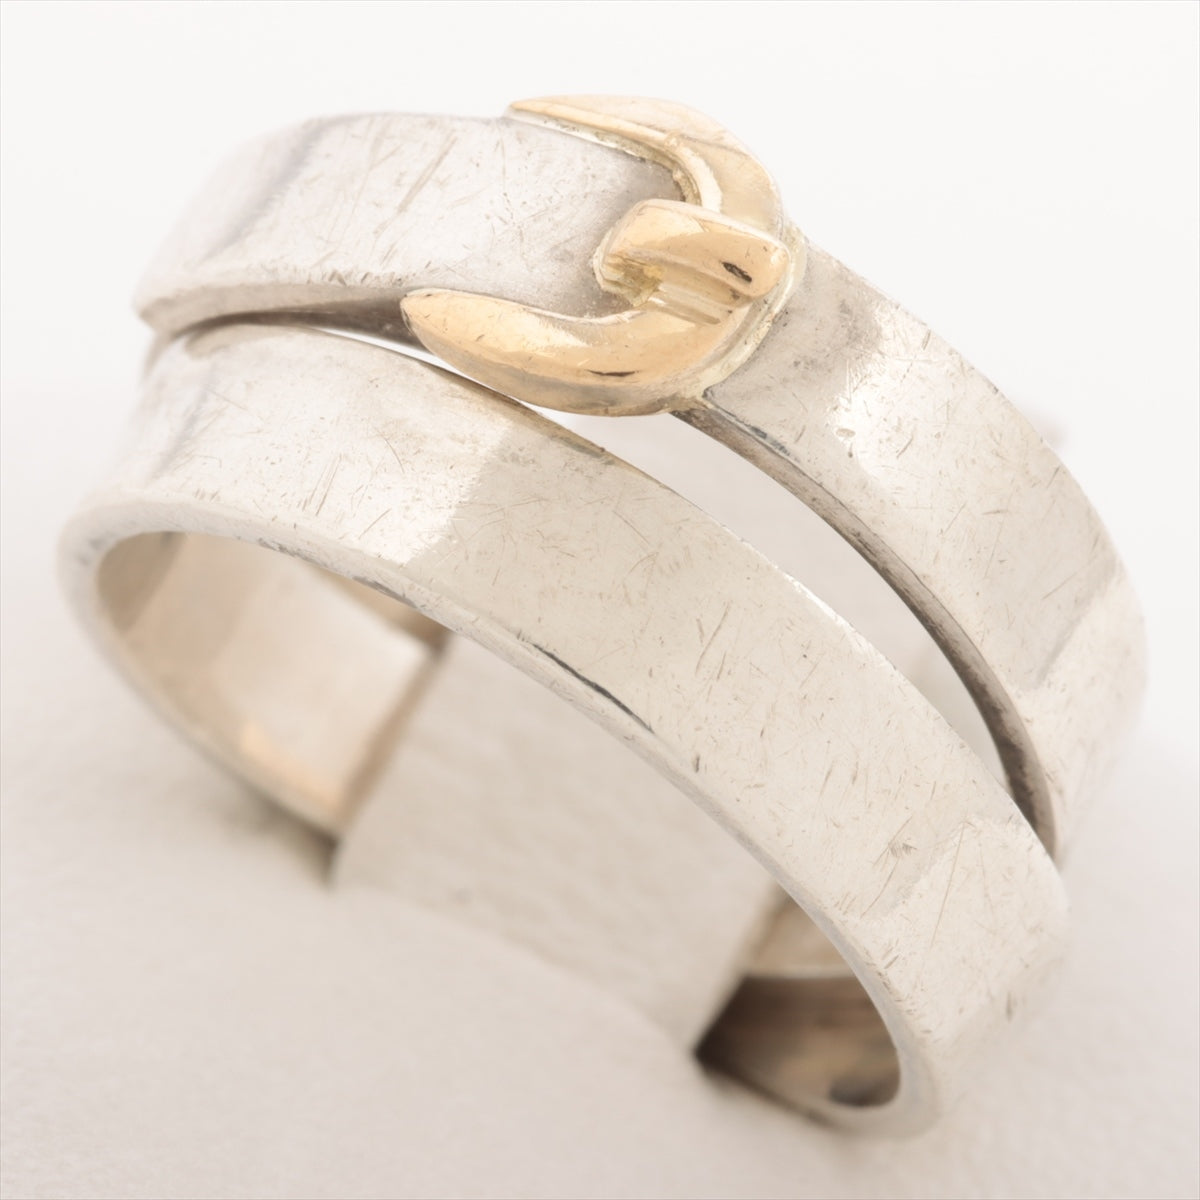 Hermès San Tulle rings 52 925×750 6.0g Gold × Silver